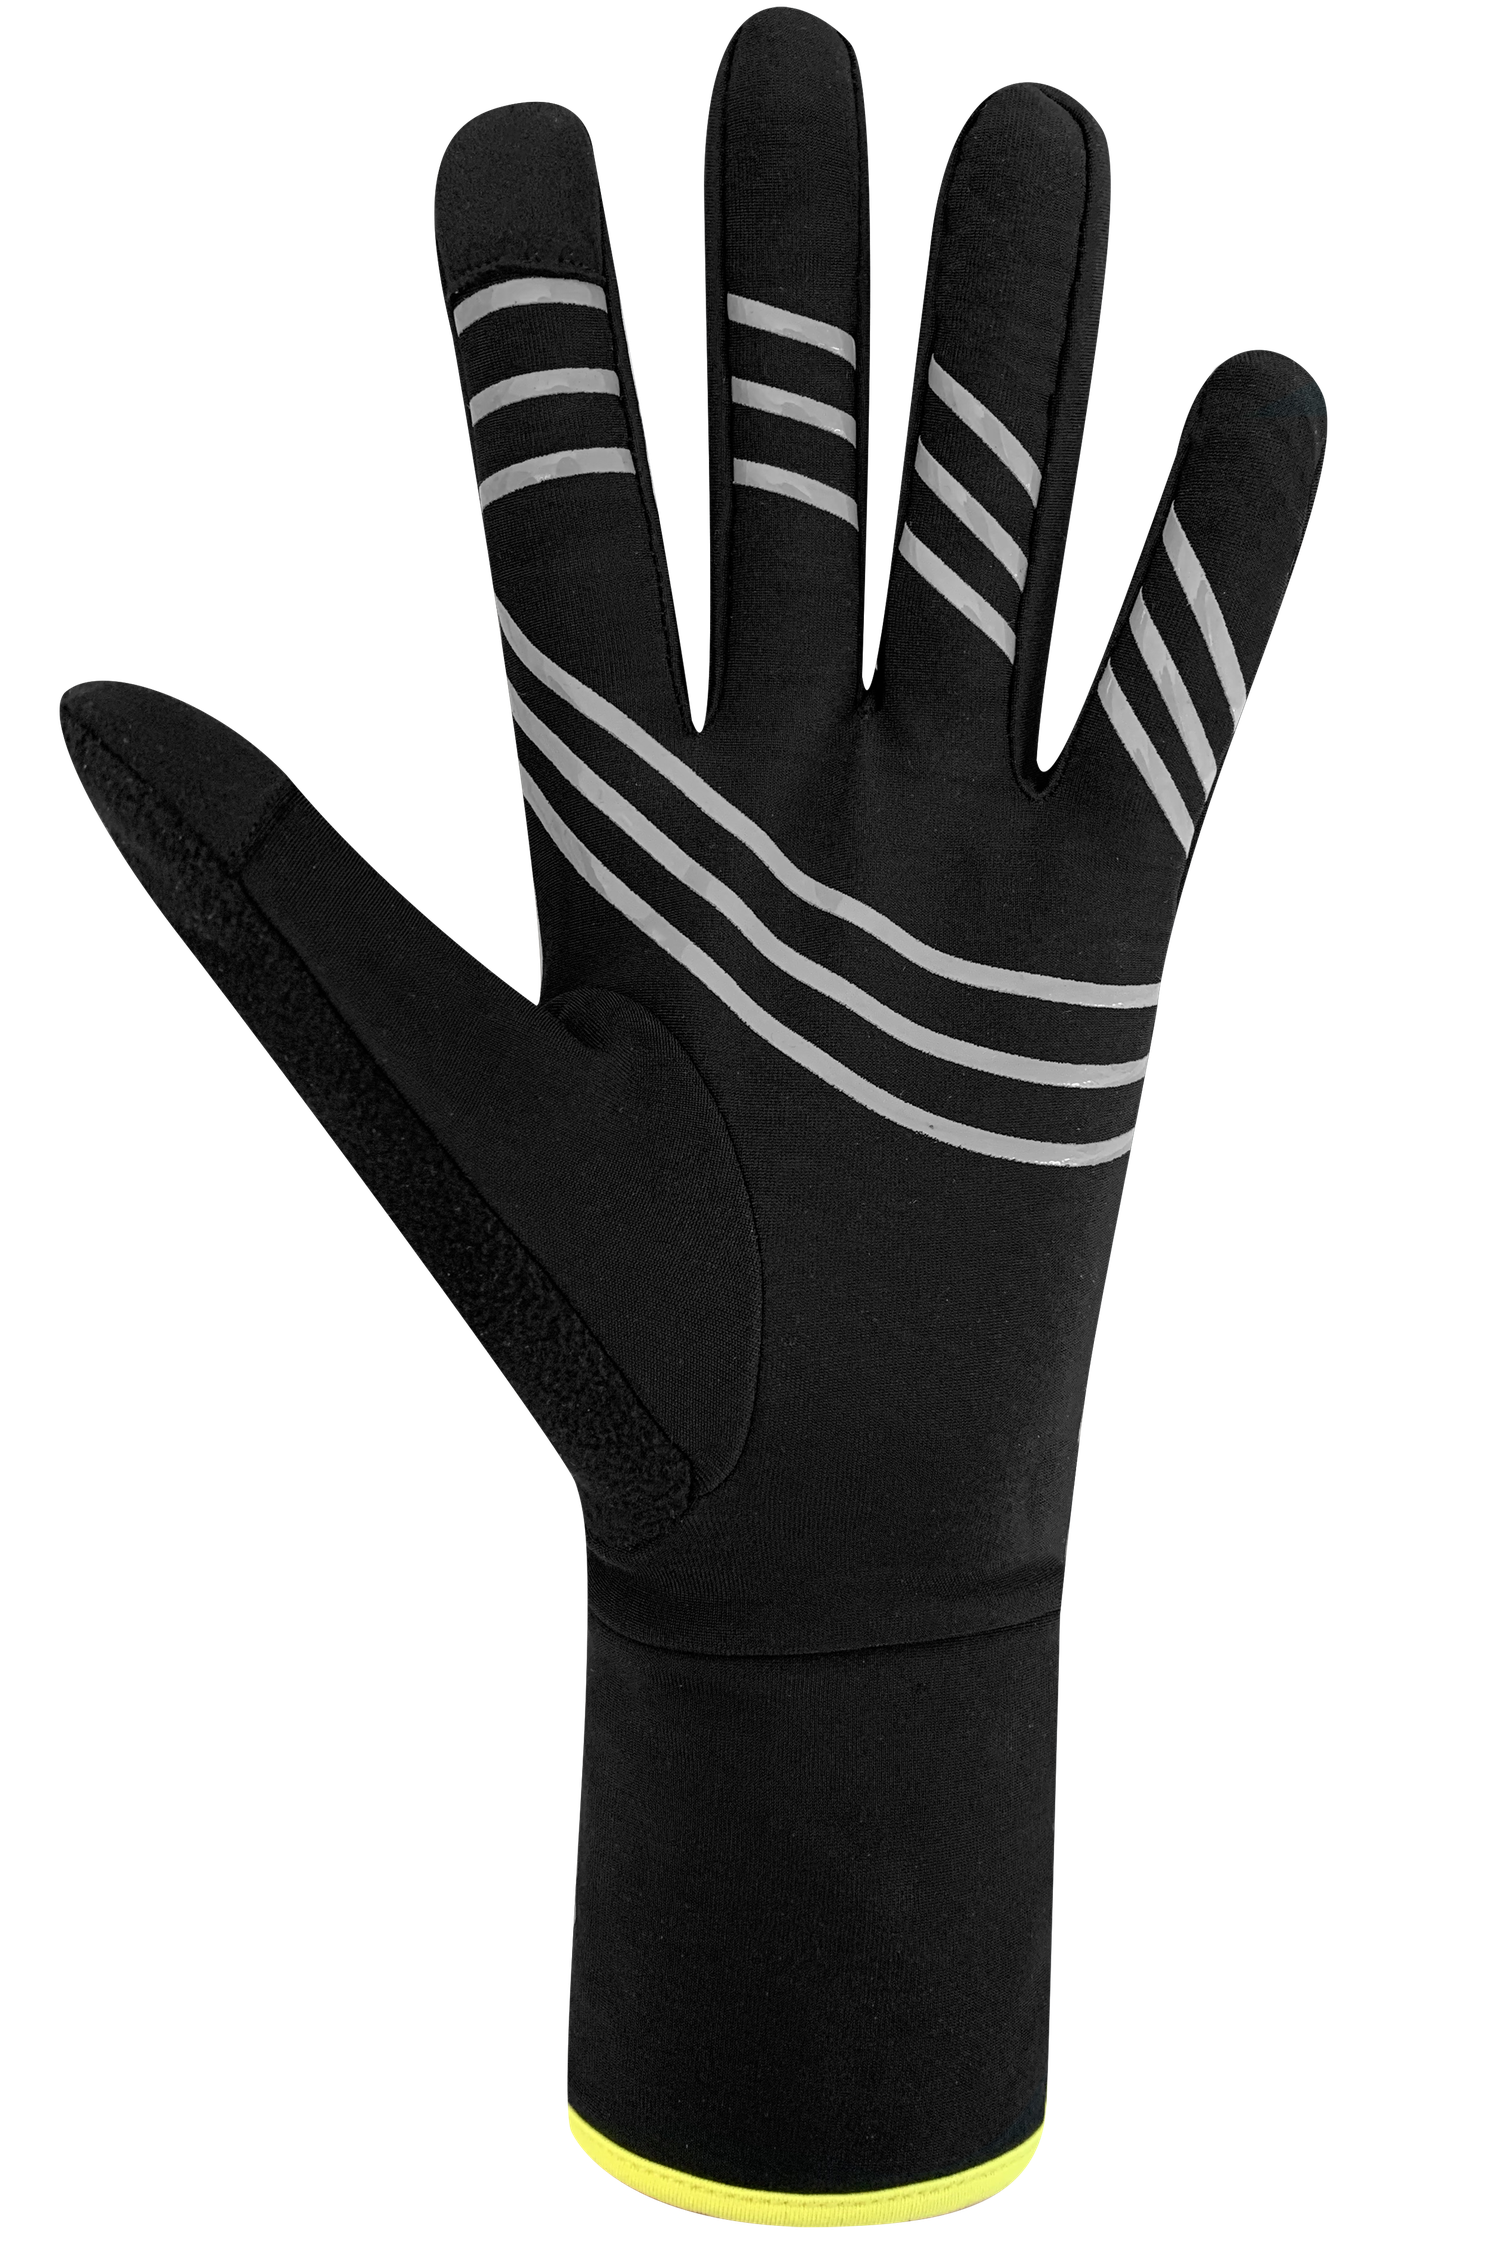 VO2 Max Running Gloves - Adult, Black/Reflective